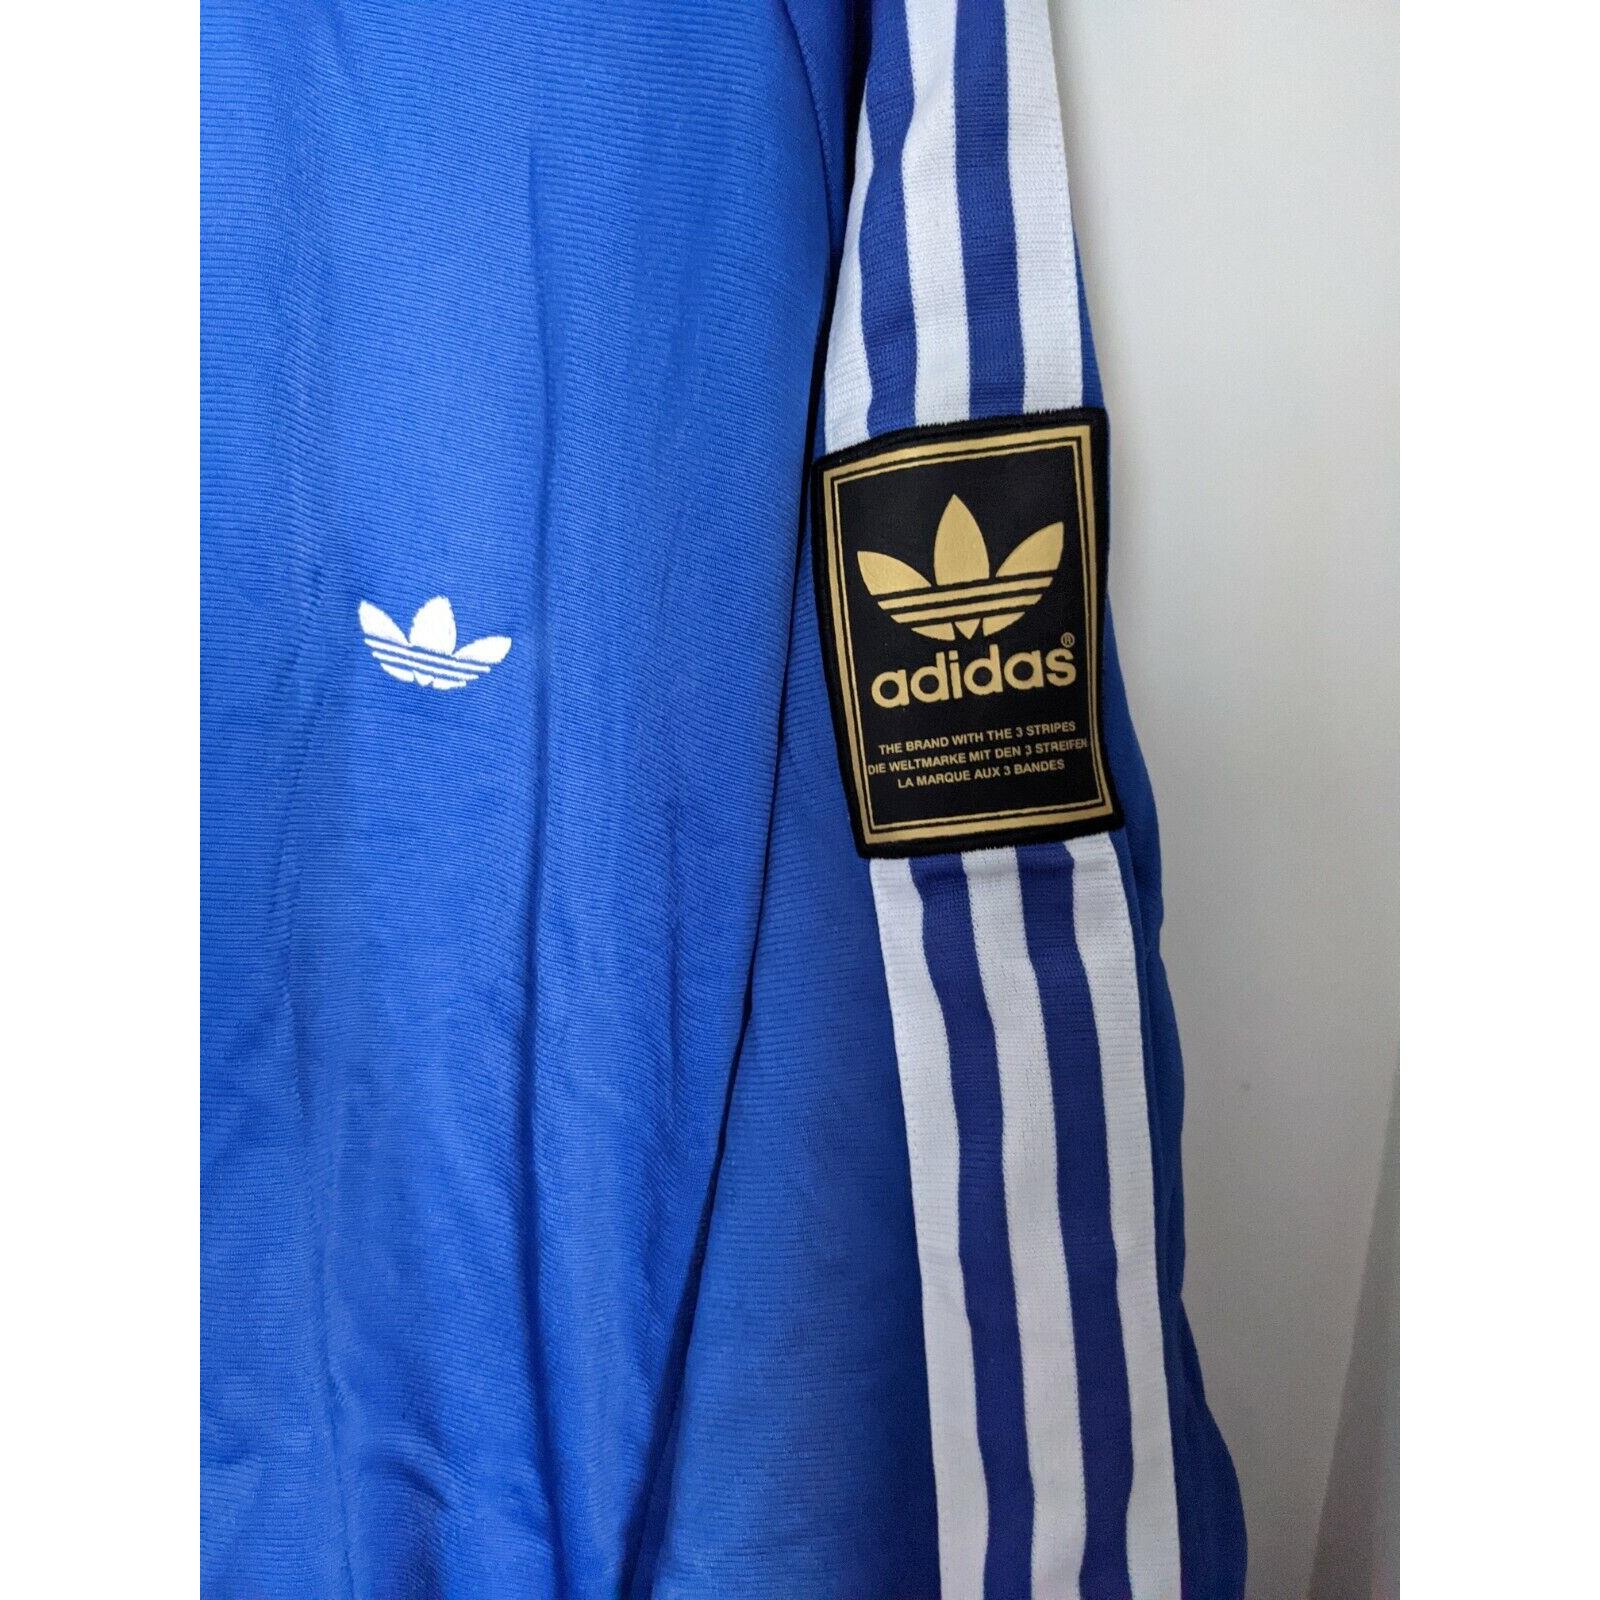 Adidas clothing USA - Blue 0